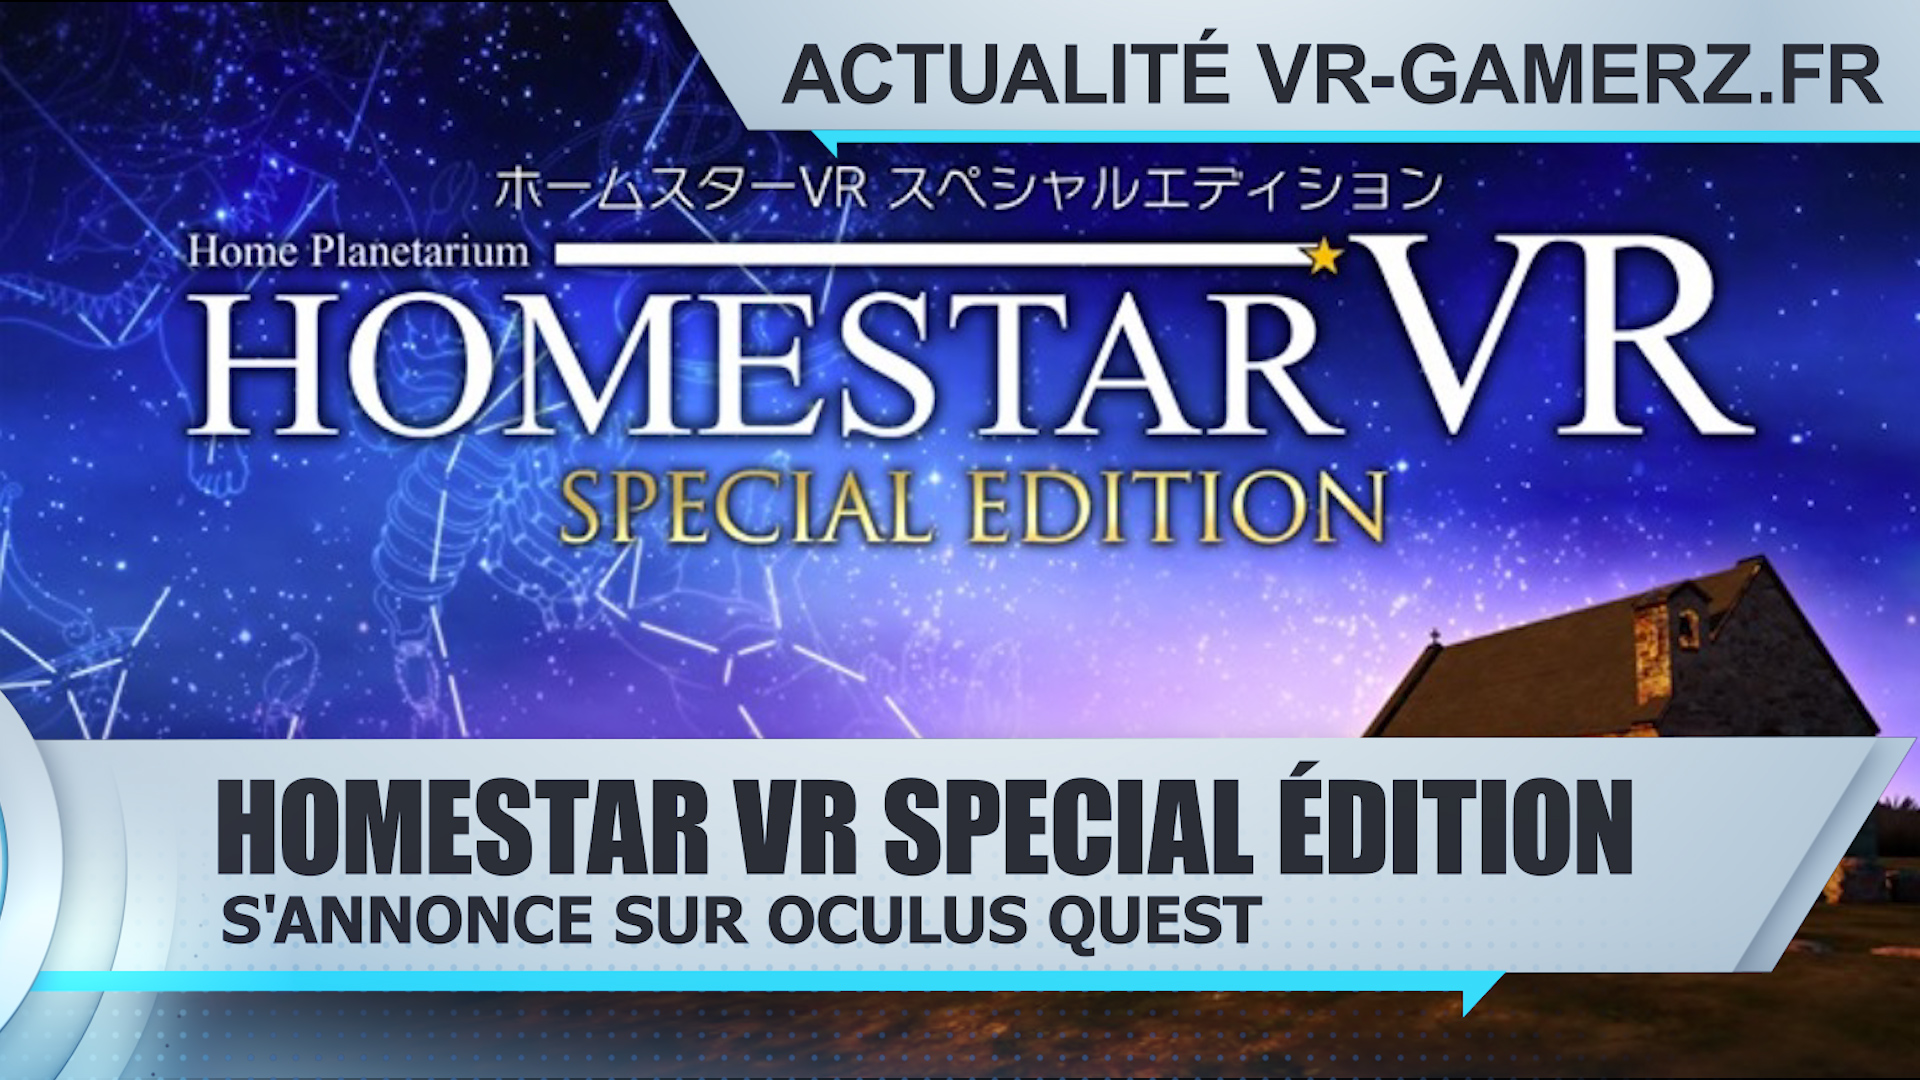 Homestar VR special édition Oculus quest : Le planetarium en VR sera bientôt disponible